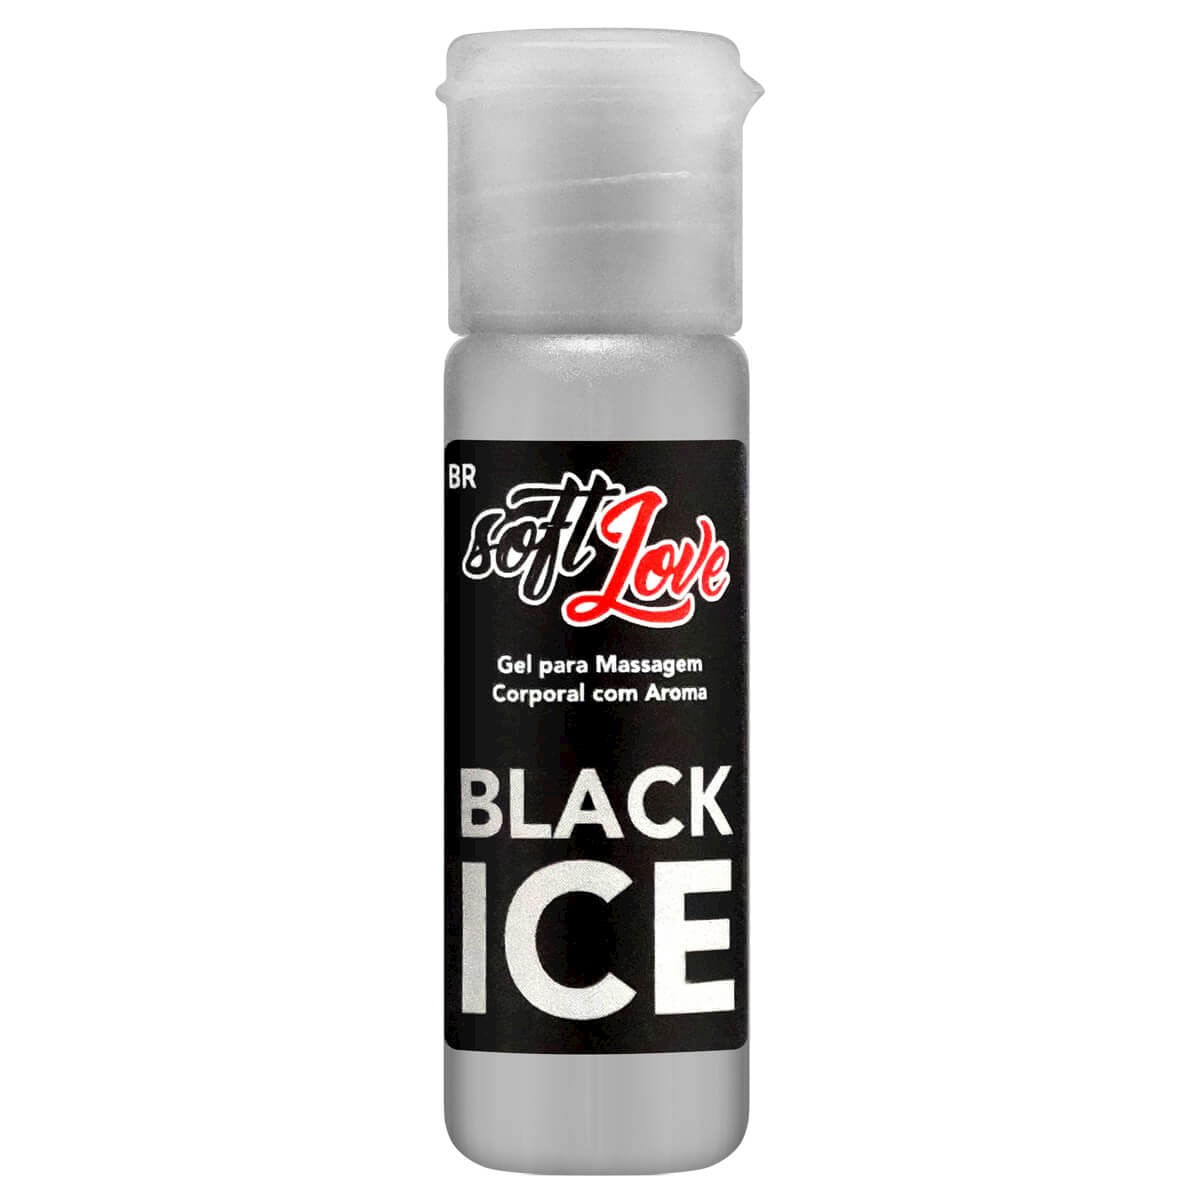 Óleo para Massagem Black Ice 15ml Soft Love